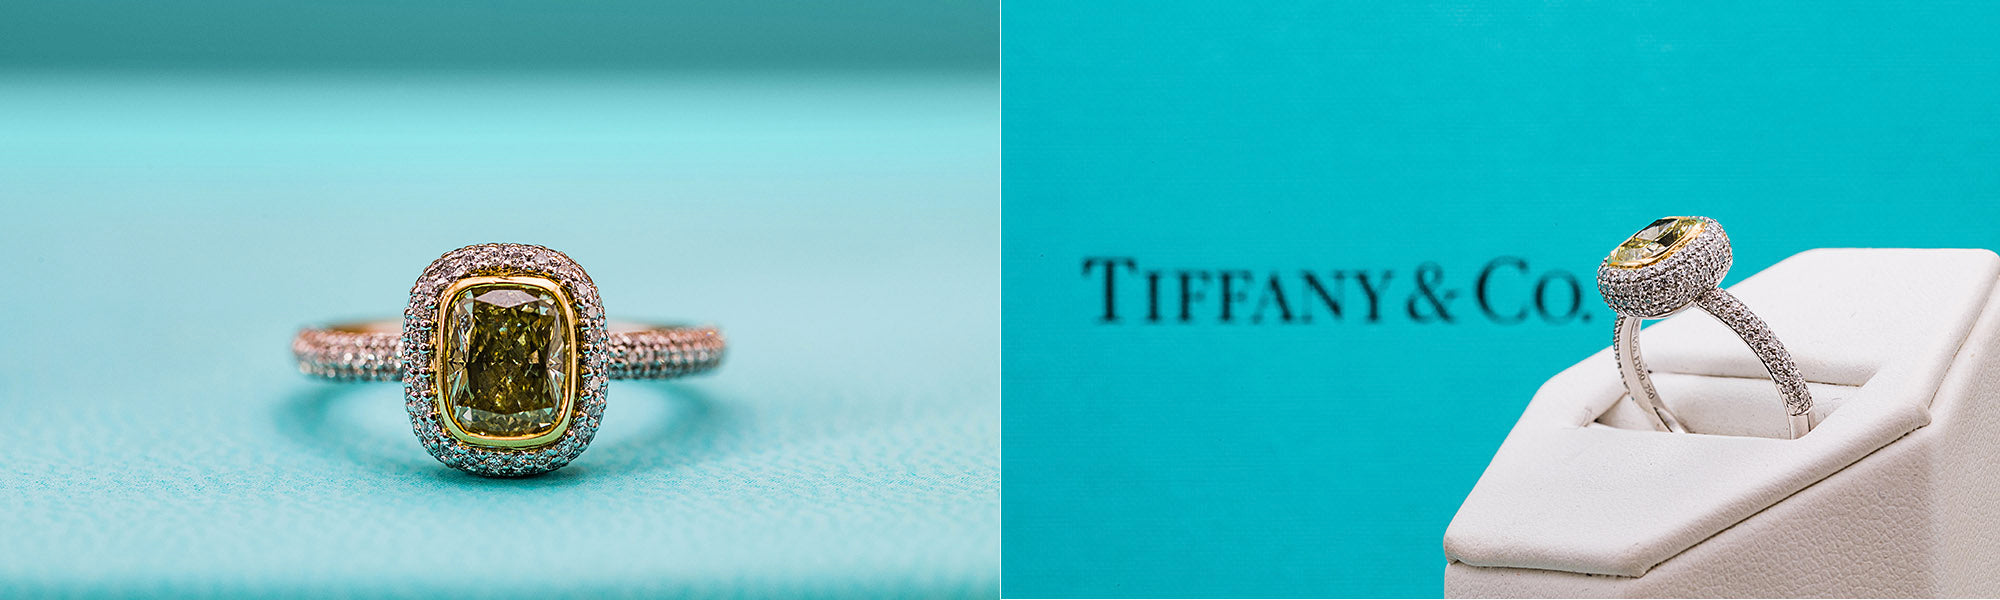 Tiffany & Co Jewellery